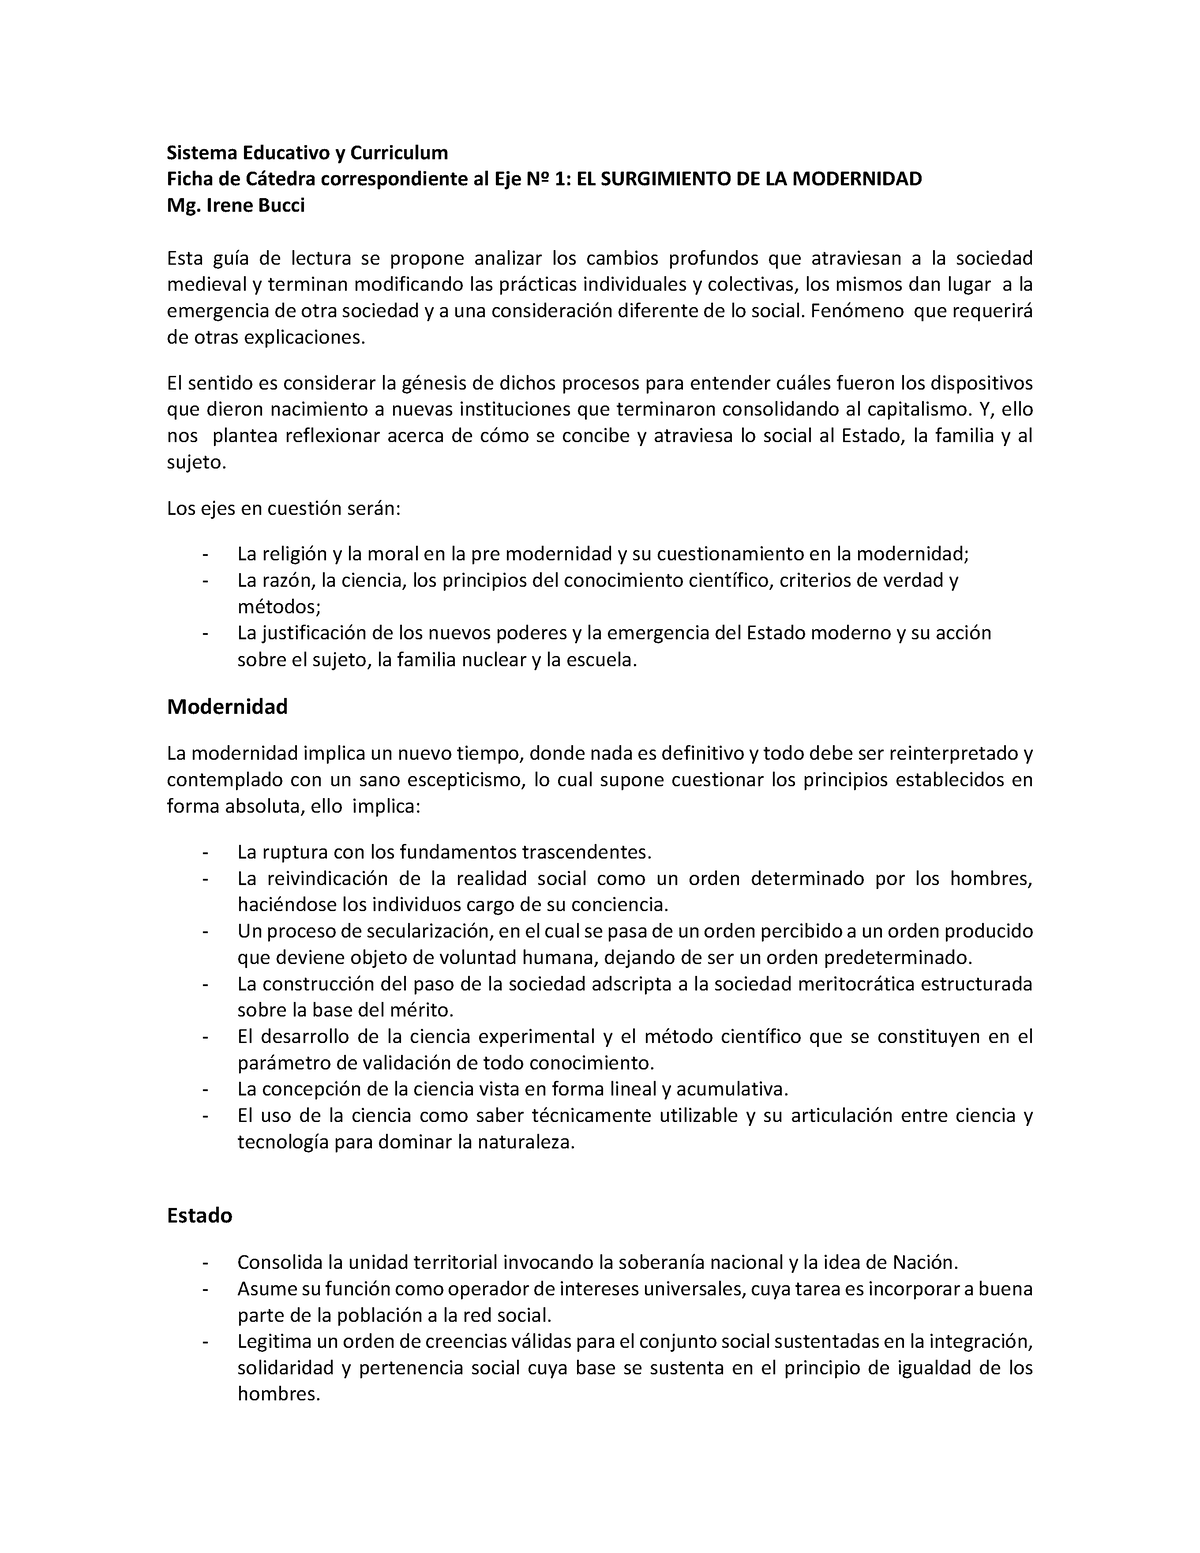 Ficha de Cátedra EJE Modernidad Bucci Sistema Educativo y Curriculum Ficha de Ctedra